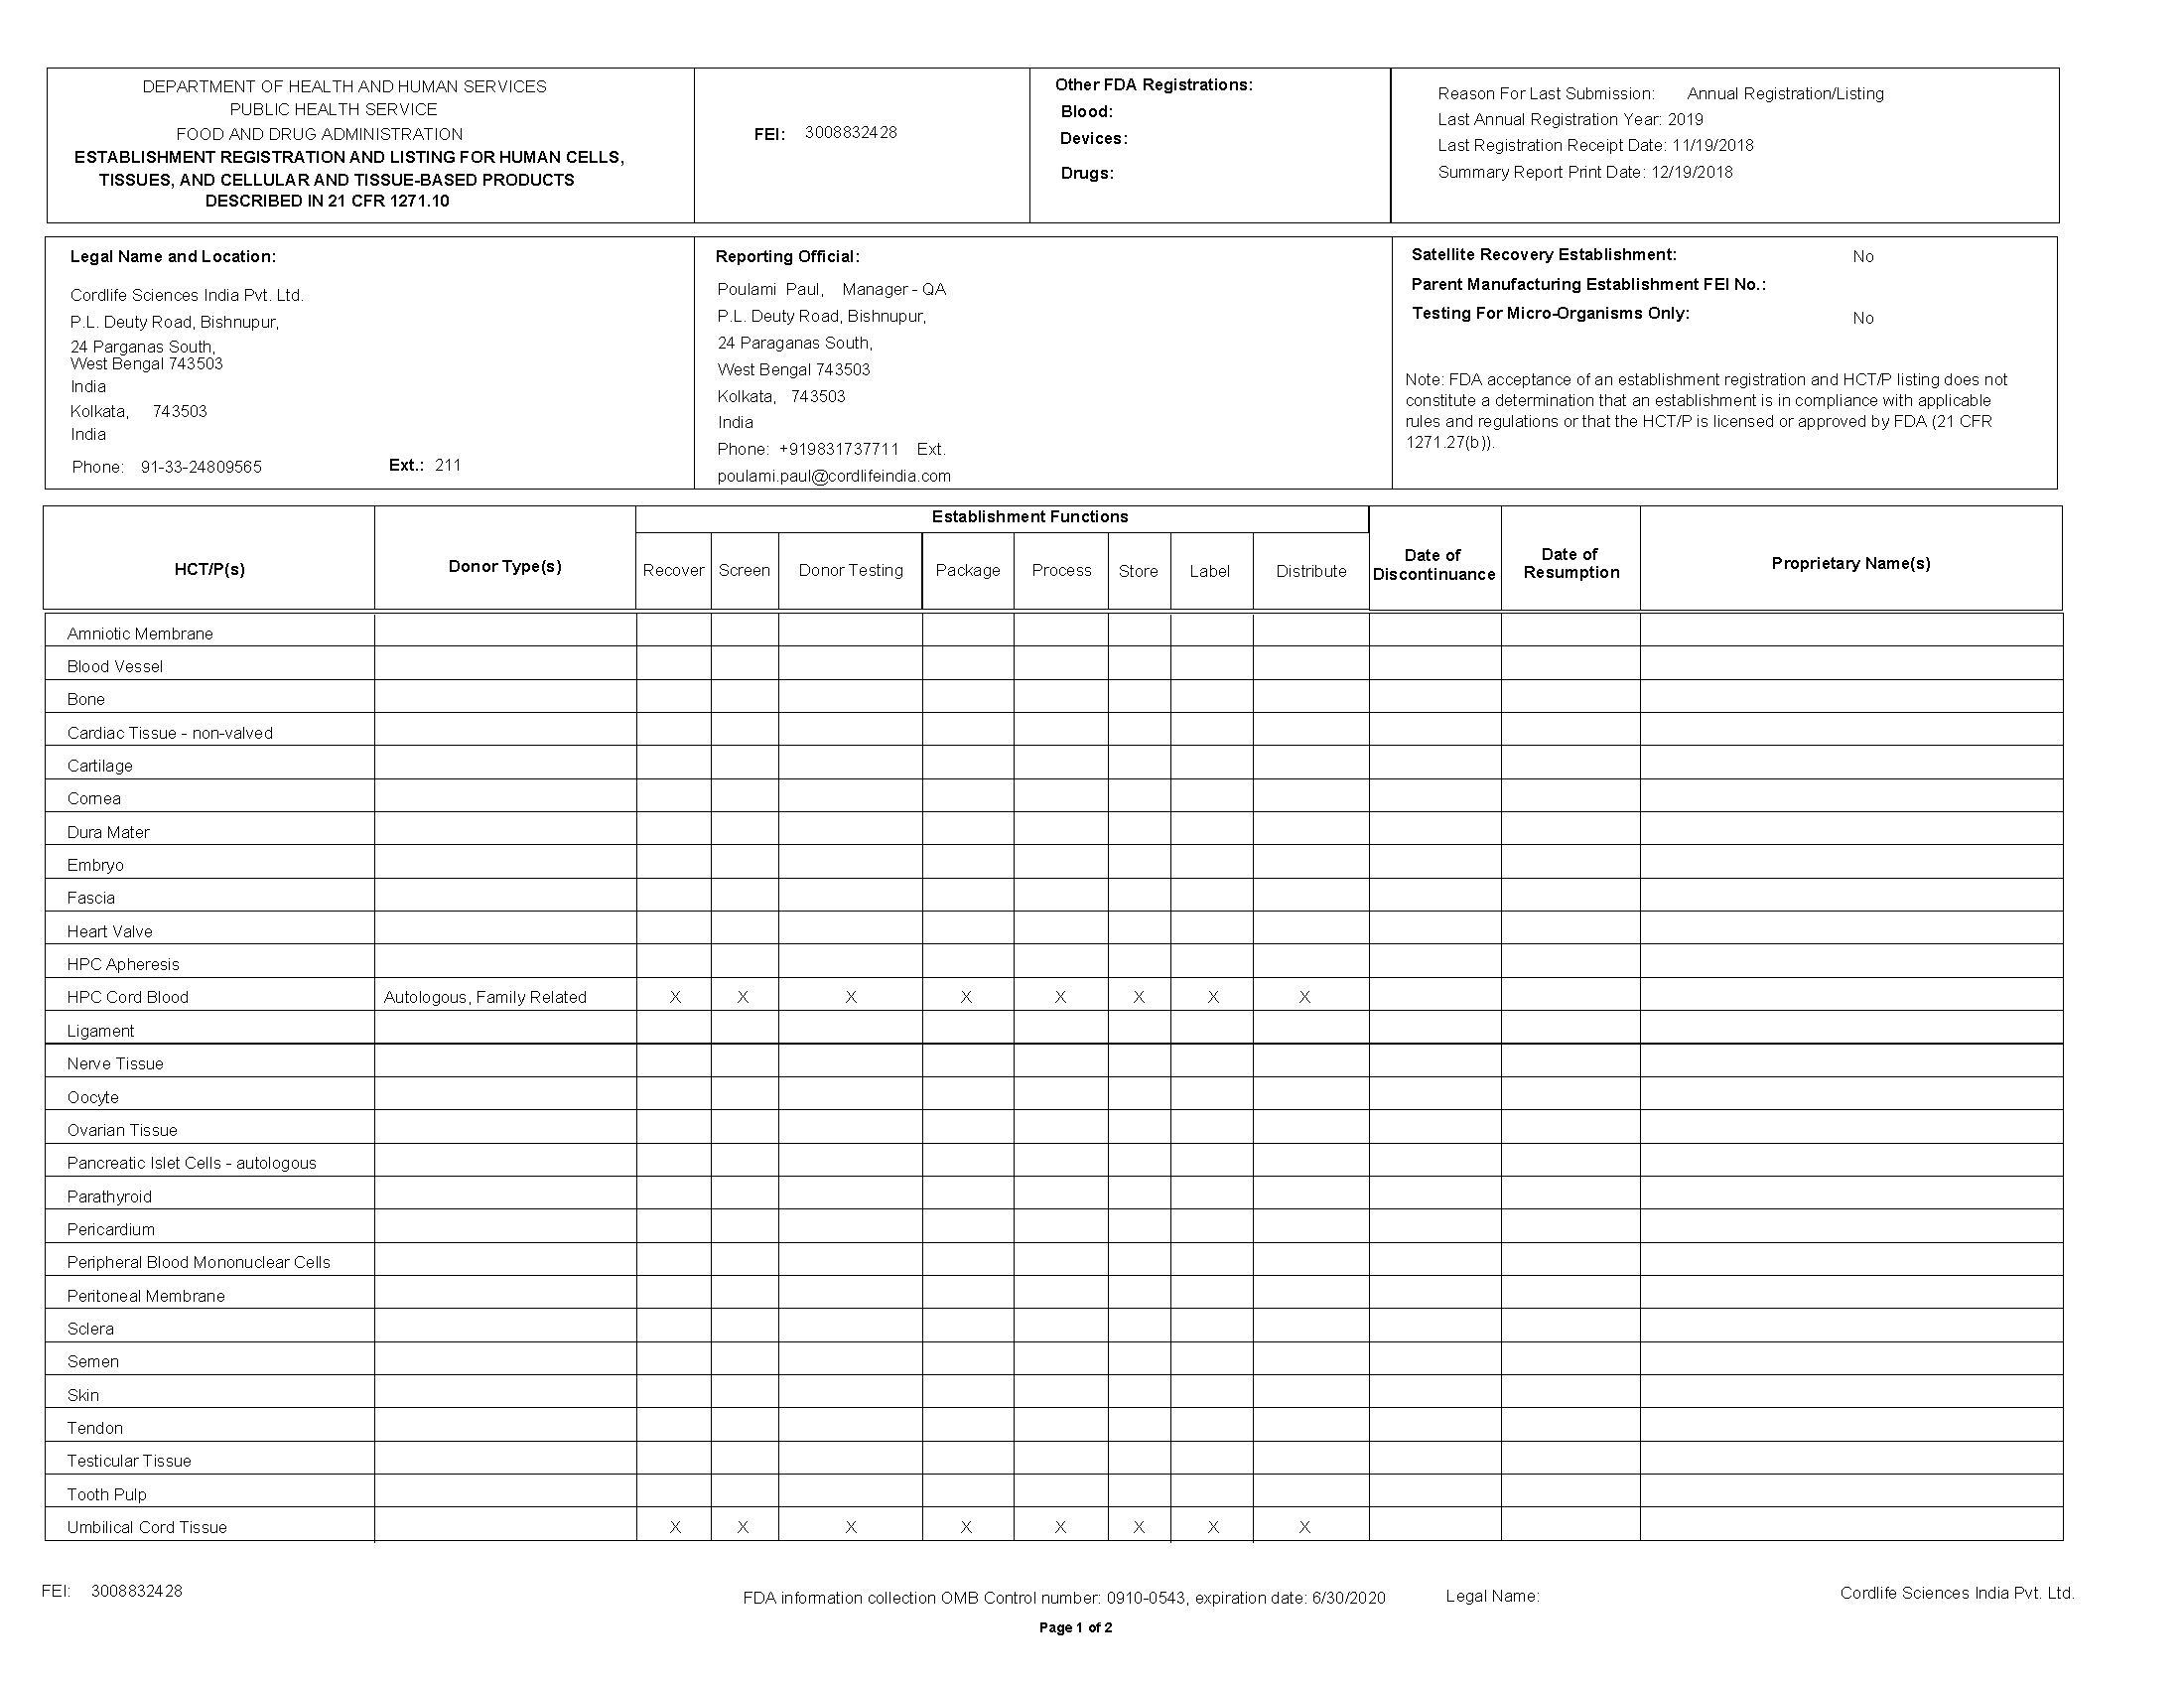 FDA registration certificate for 2018